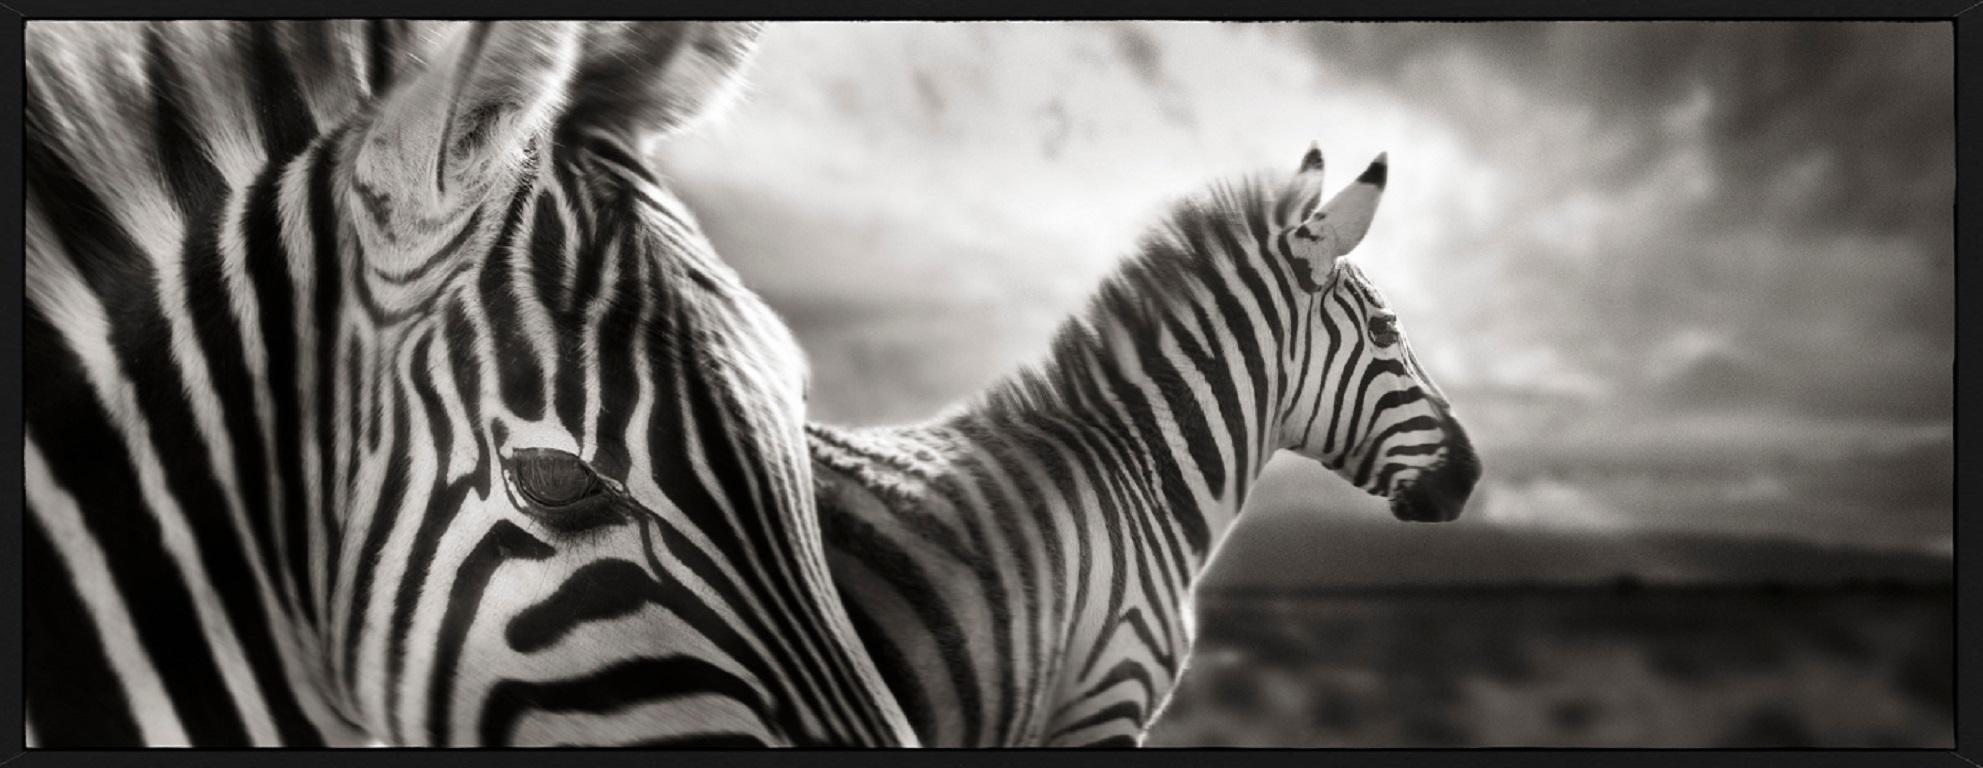 Zebra Duo - Close-Up fine art photography of two zebras in landscape, wildlife - Photograph by Joachim Schmeisser